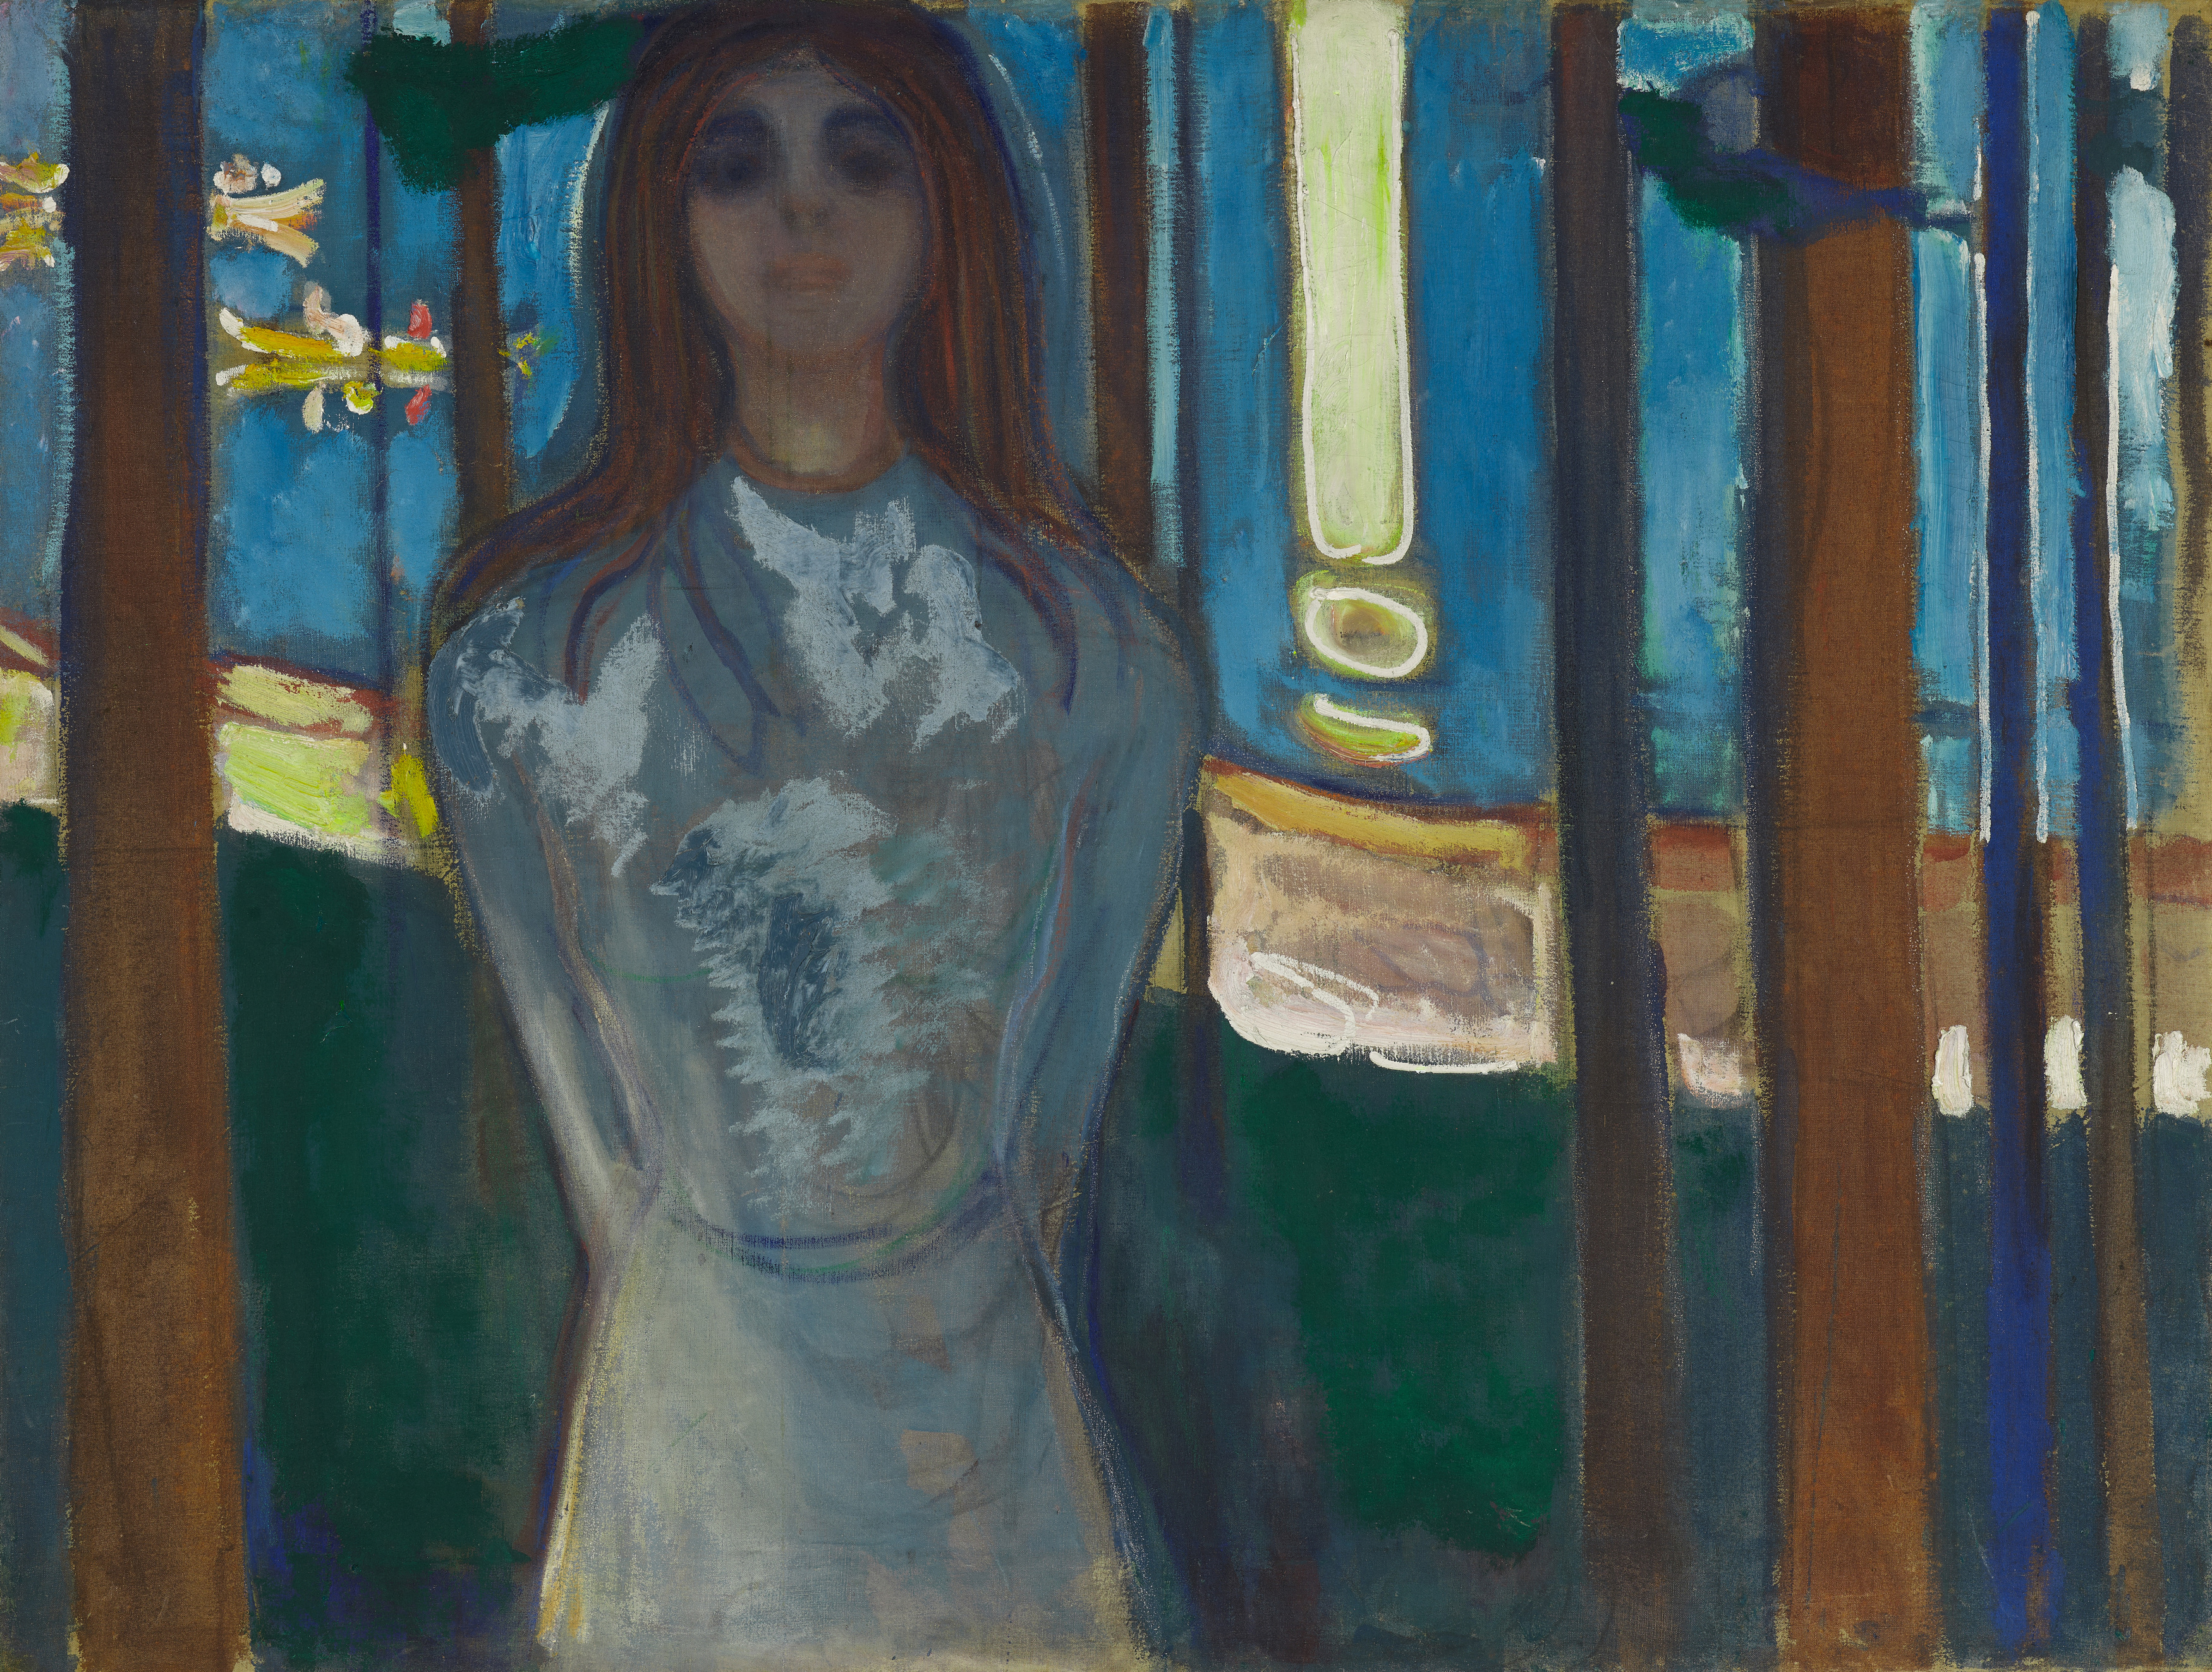 Edvard Munch: Summer Night. The Voice. Oil on unprimed canvas, 1896. Photo © Munchmuseet